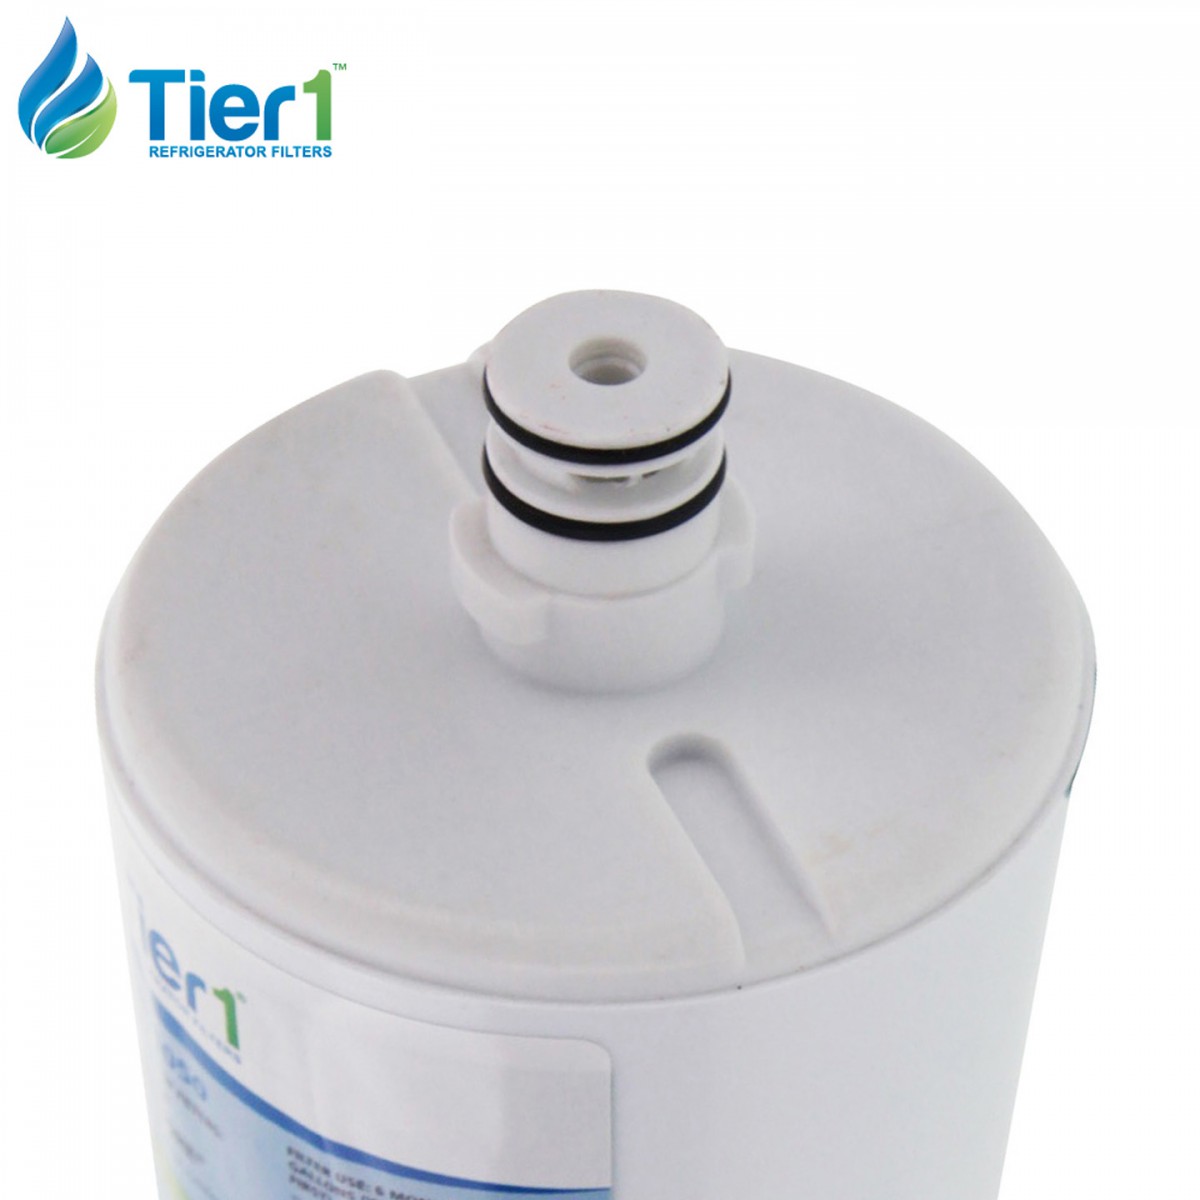 Tier1 RWF1050 Refrigerator Water Filter 6-pk | Replacement for LG LT500P, 5231JA2002A, GEN11042FR-08, ADQ72910902, ADQ72910907, ADQ72910901, WD-F05, SP-LE500, RWF0100A, Fridge Filter - image 2 of 8